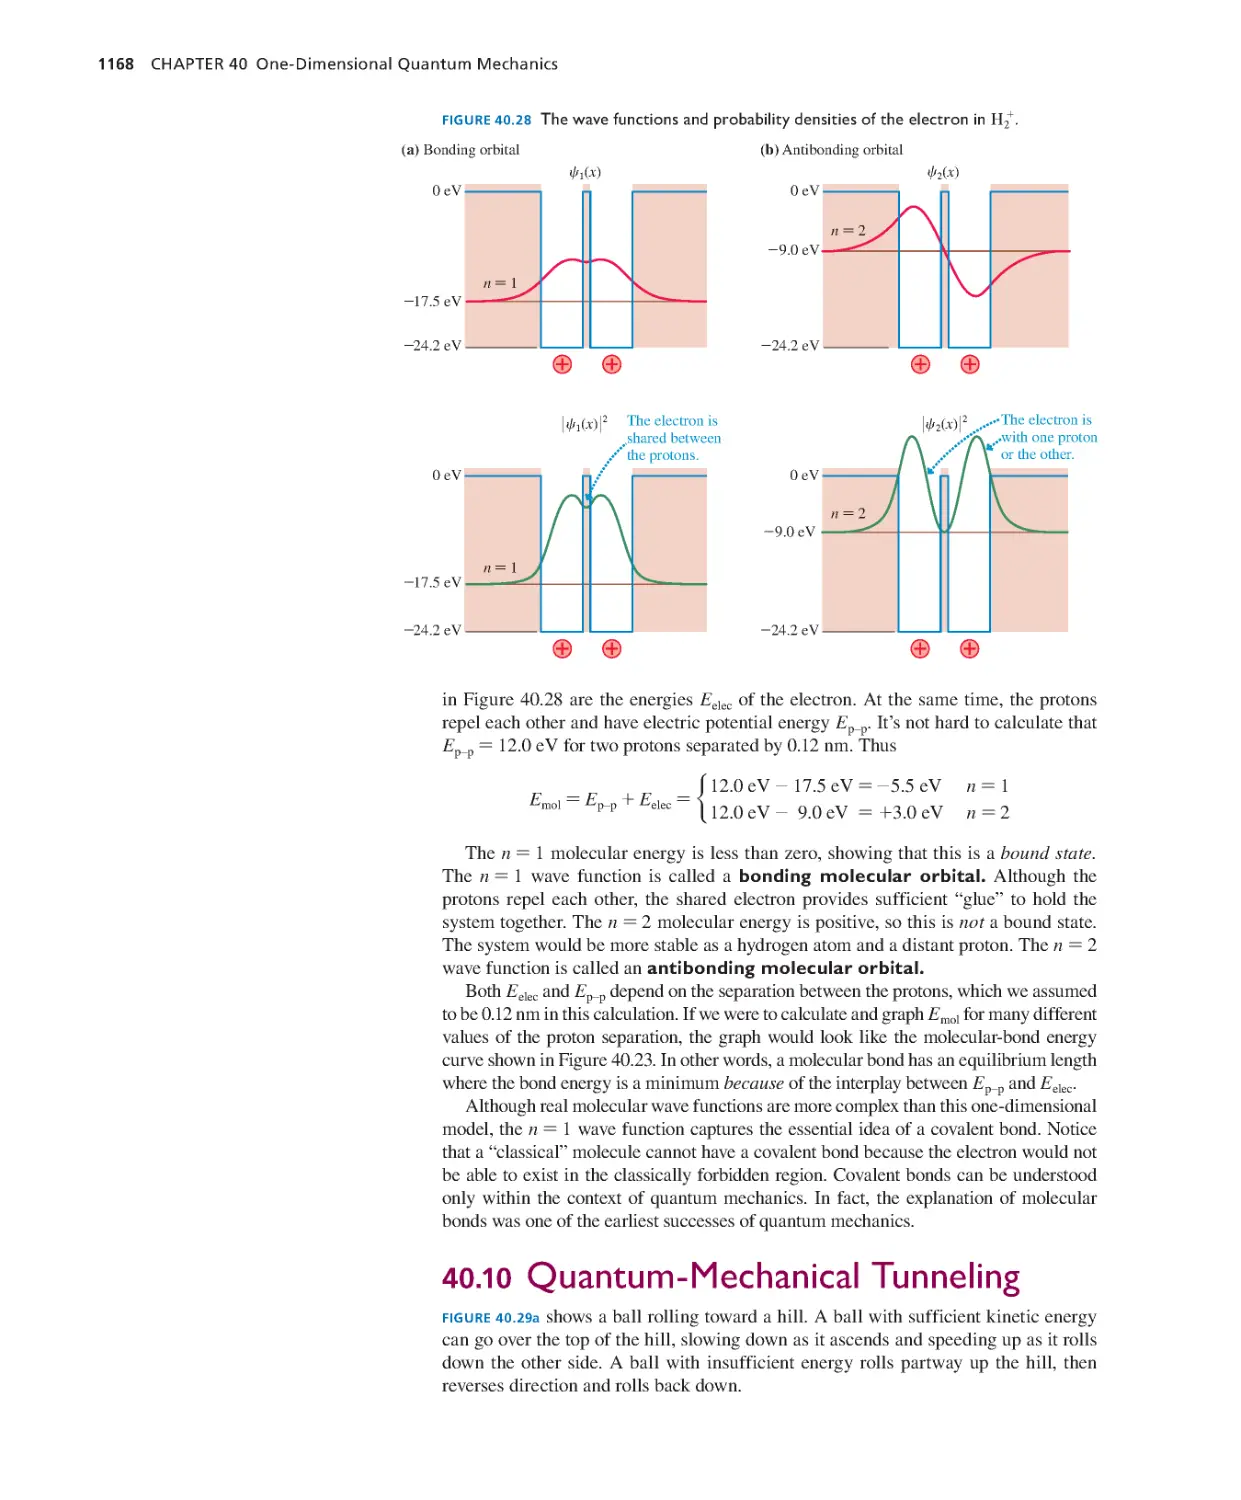 40.10. Quantum-Mechanical Tunneling